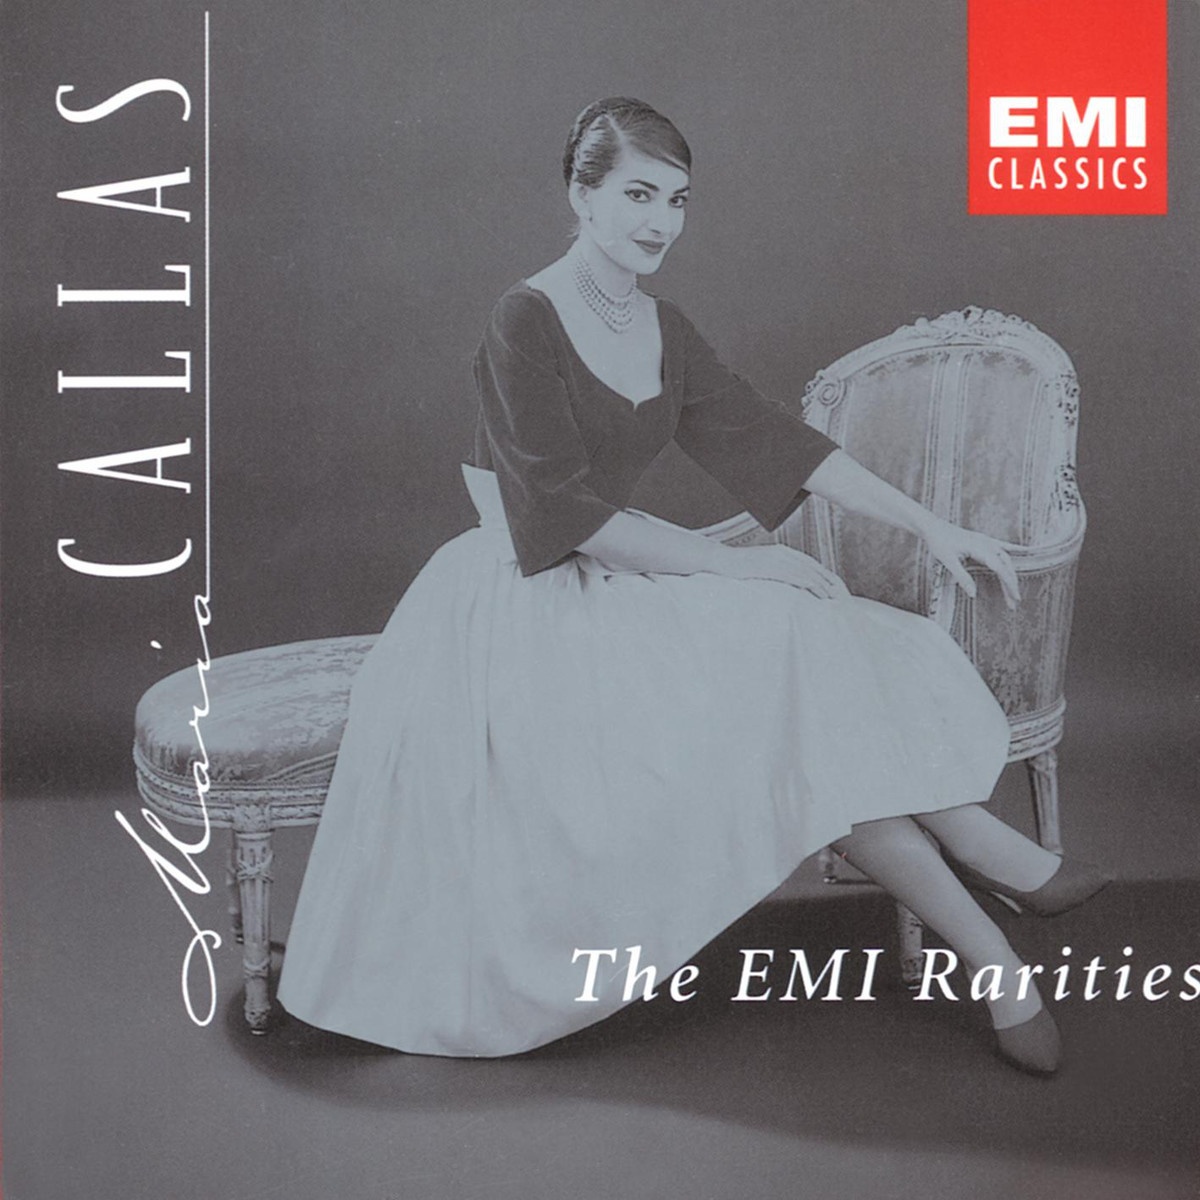 The EMI Rarities